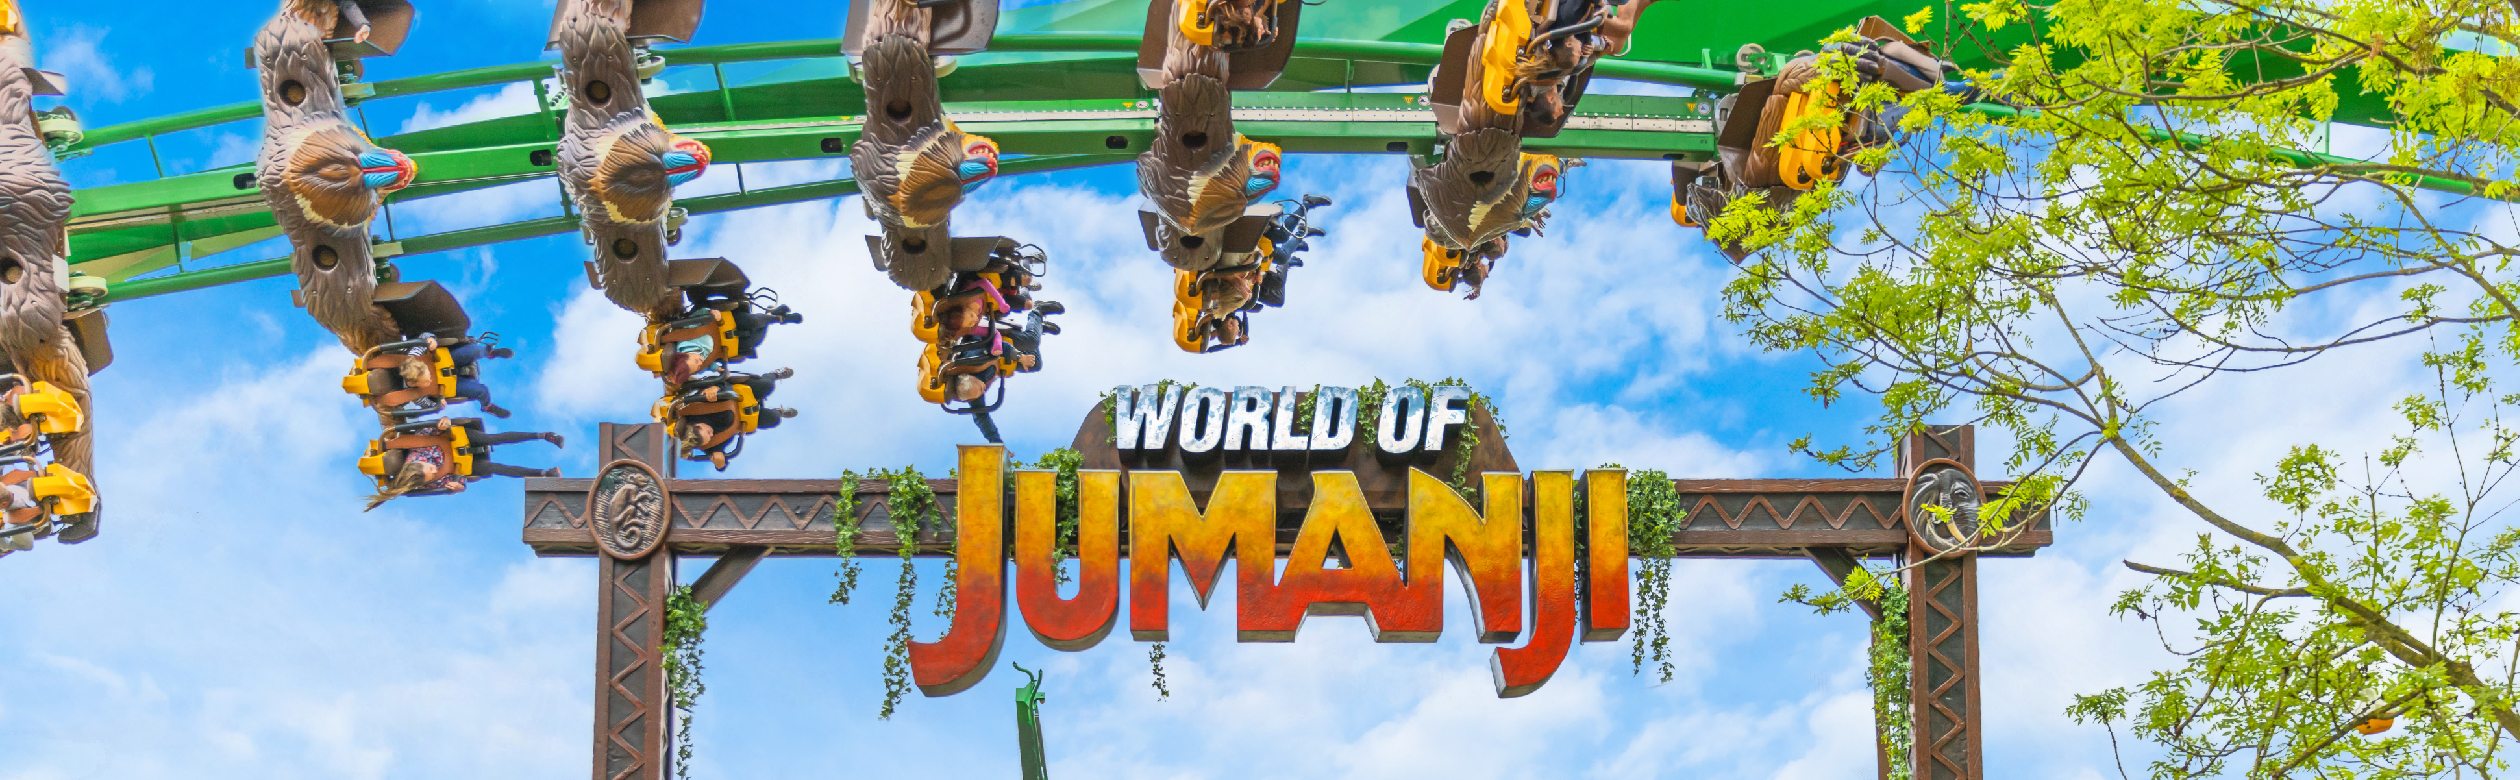 World Of Jumanji + Homepage Header Image 2520X780px 01